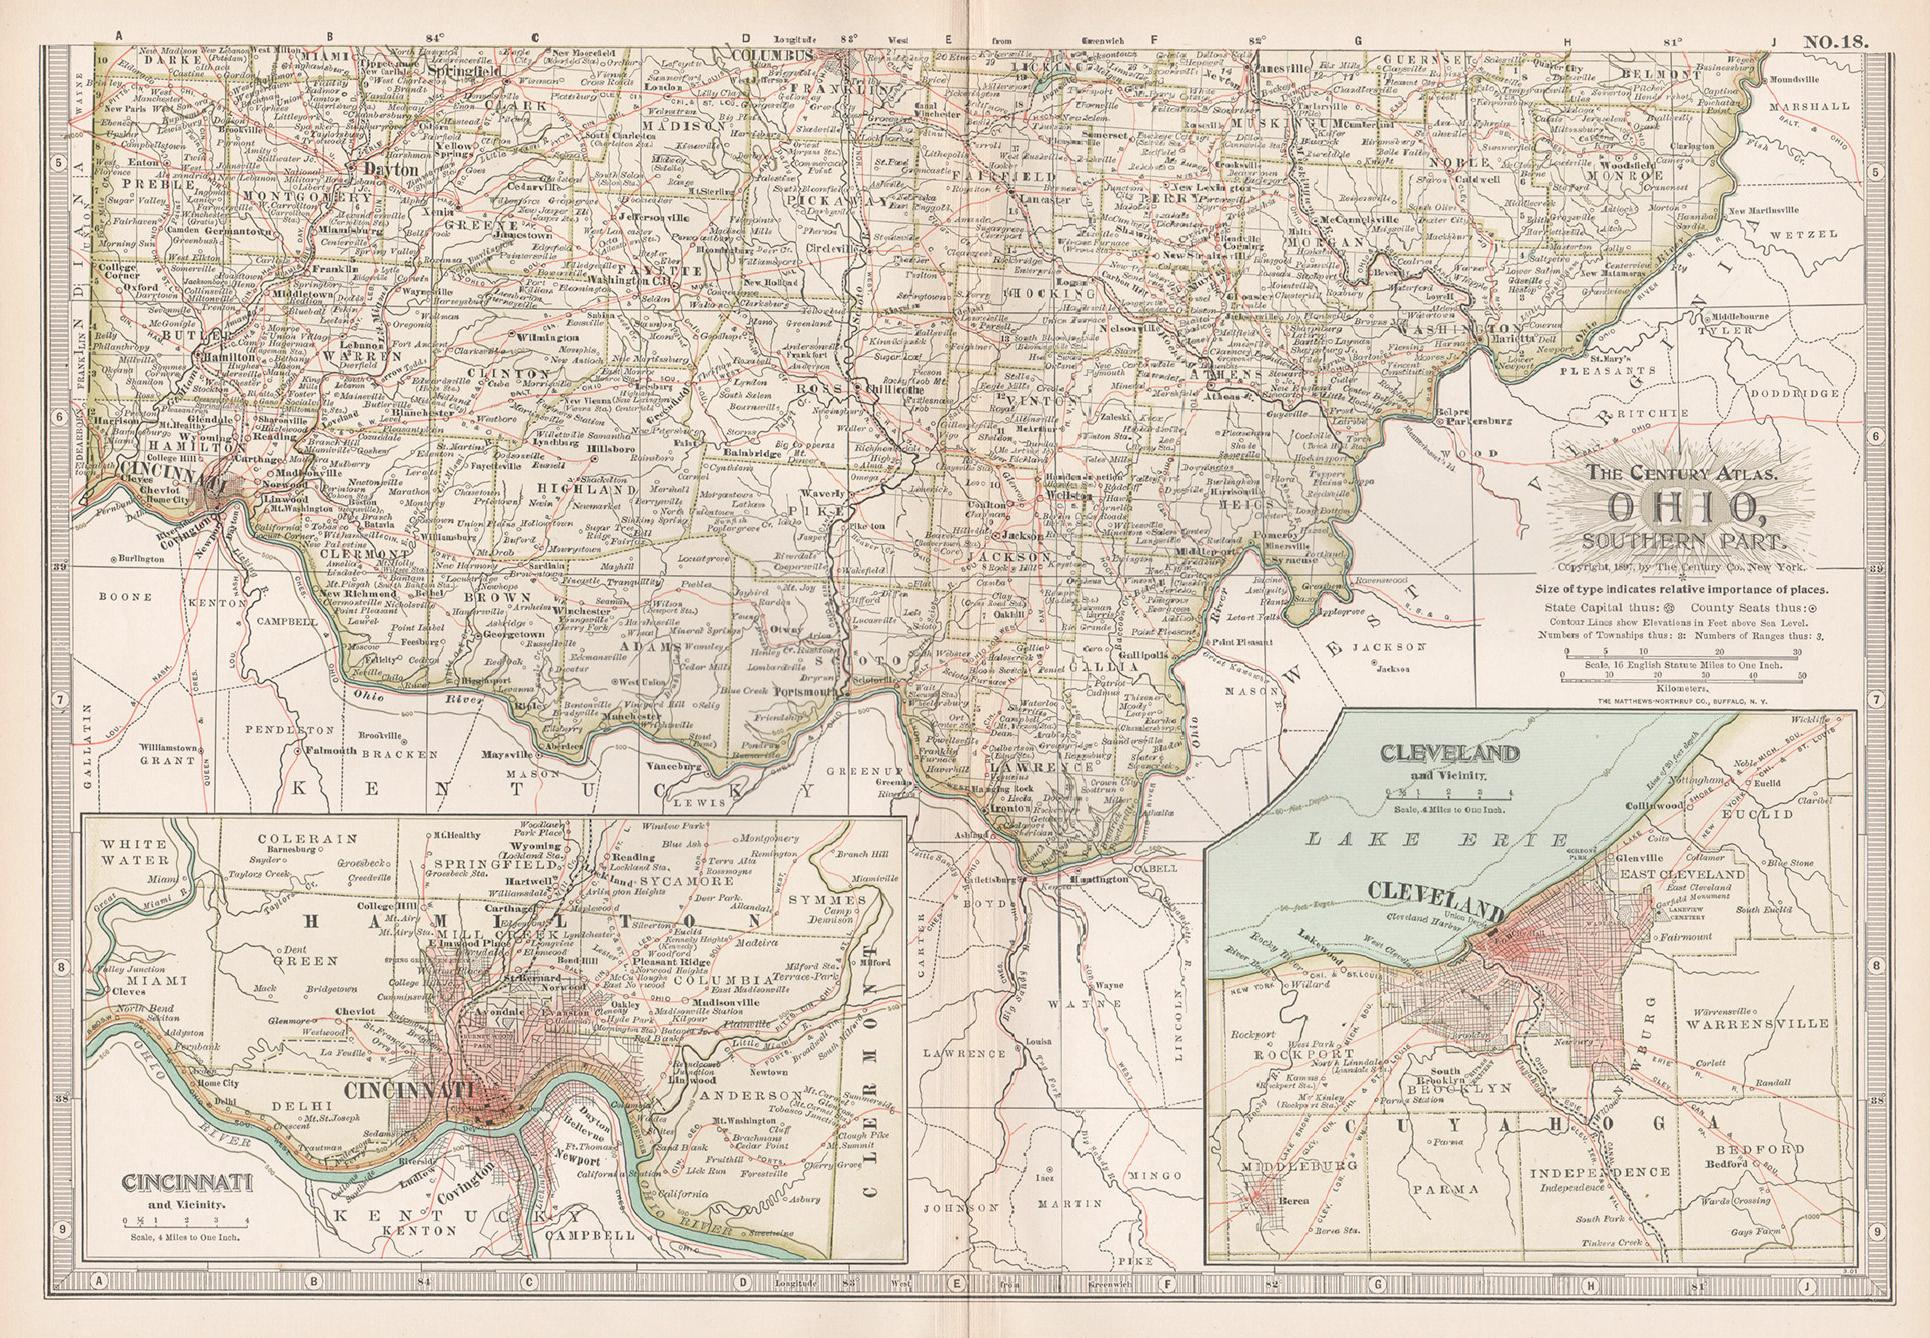 Unknown Print - Ohio, Southern Part. USA. Century Atlas state antique vintage map